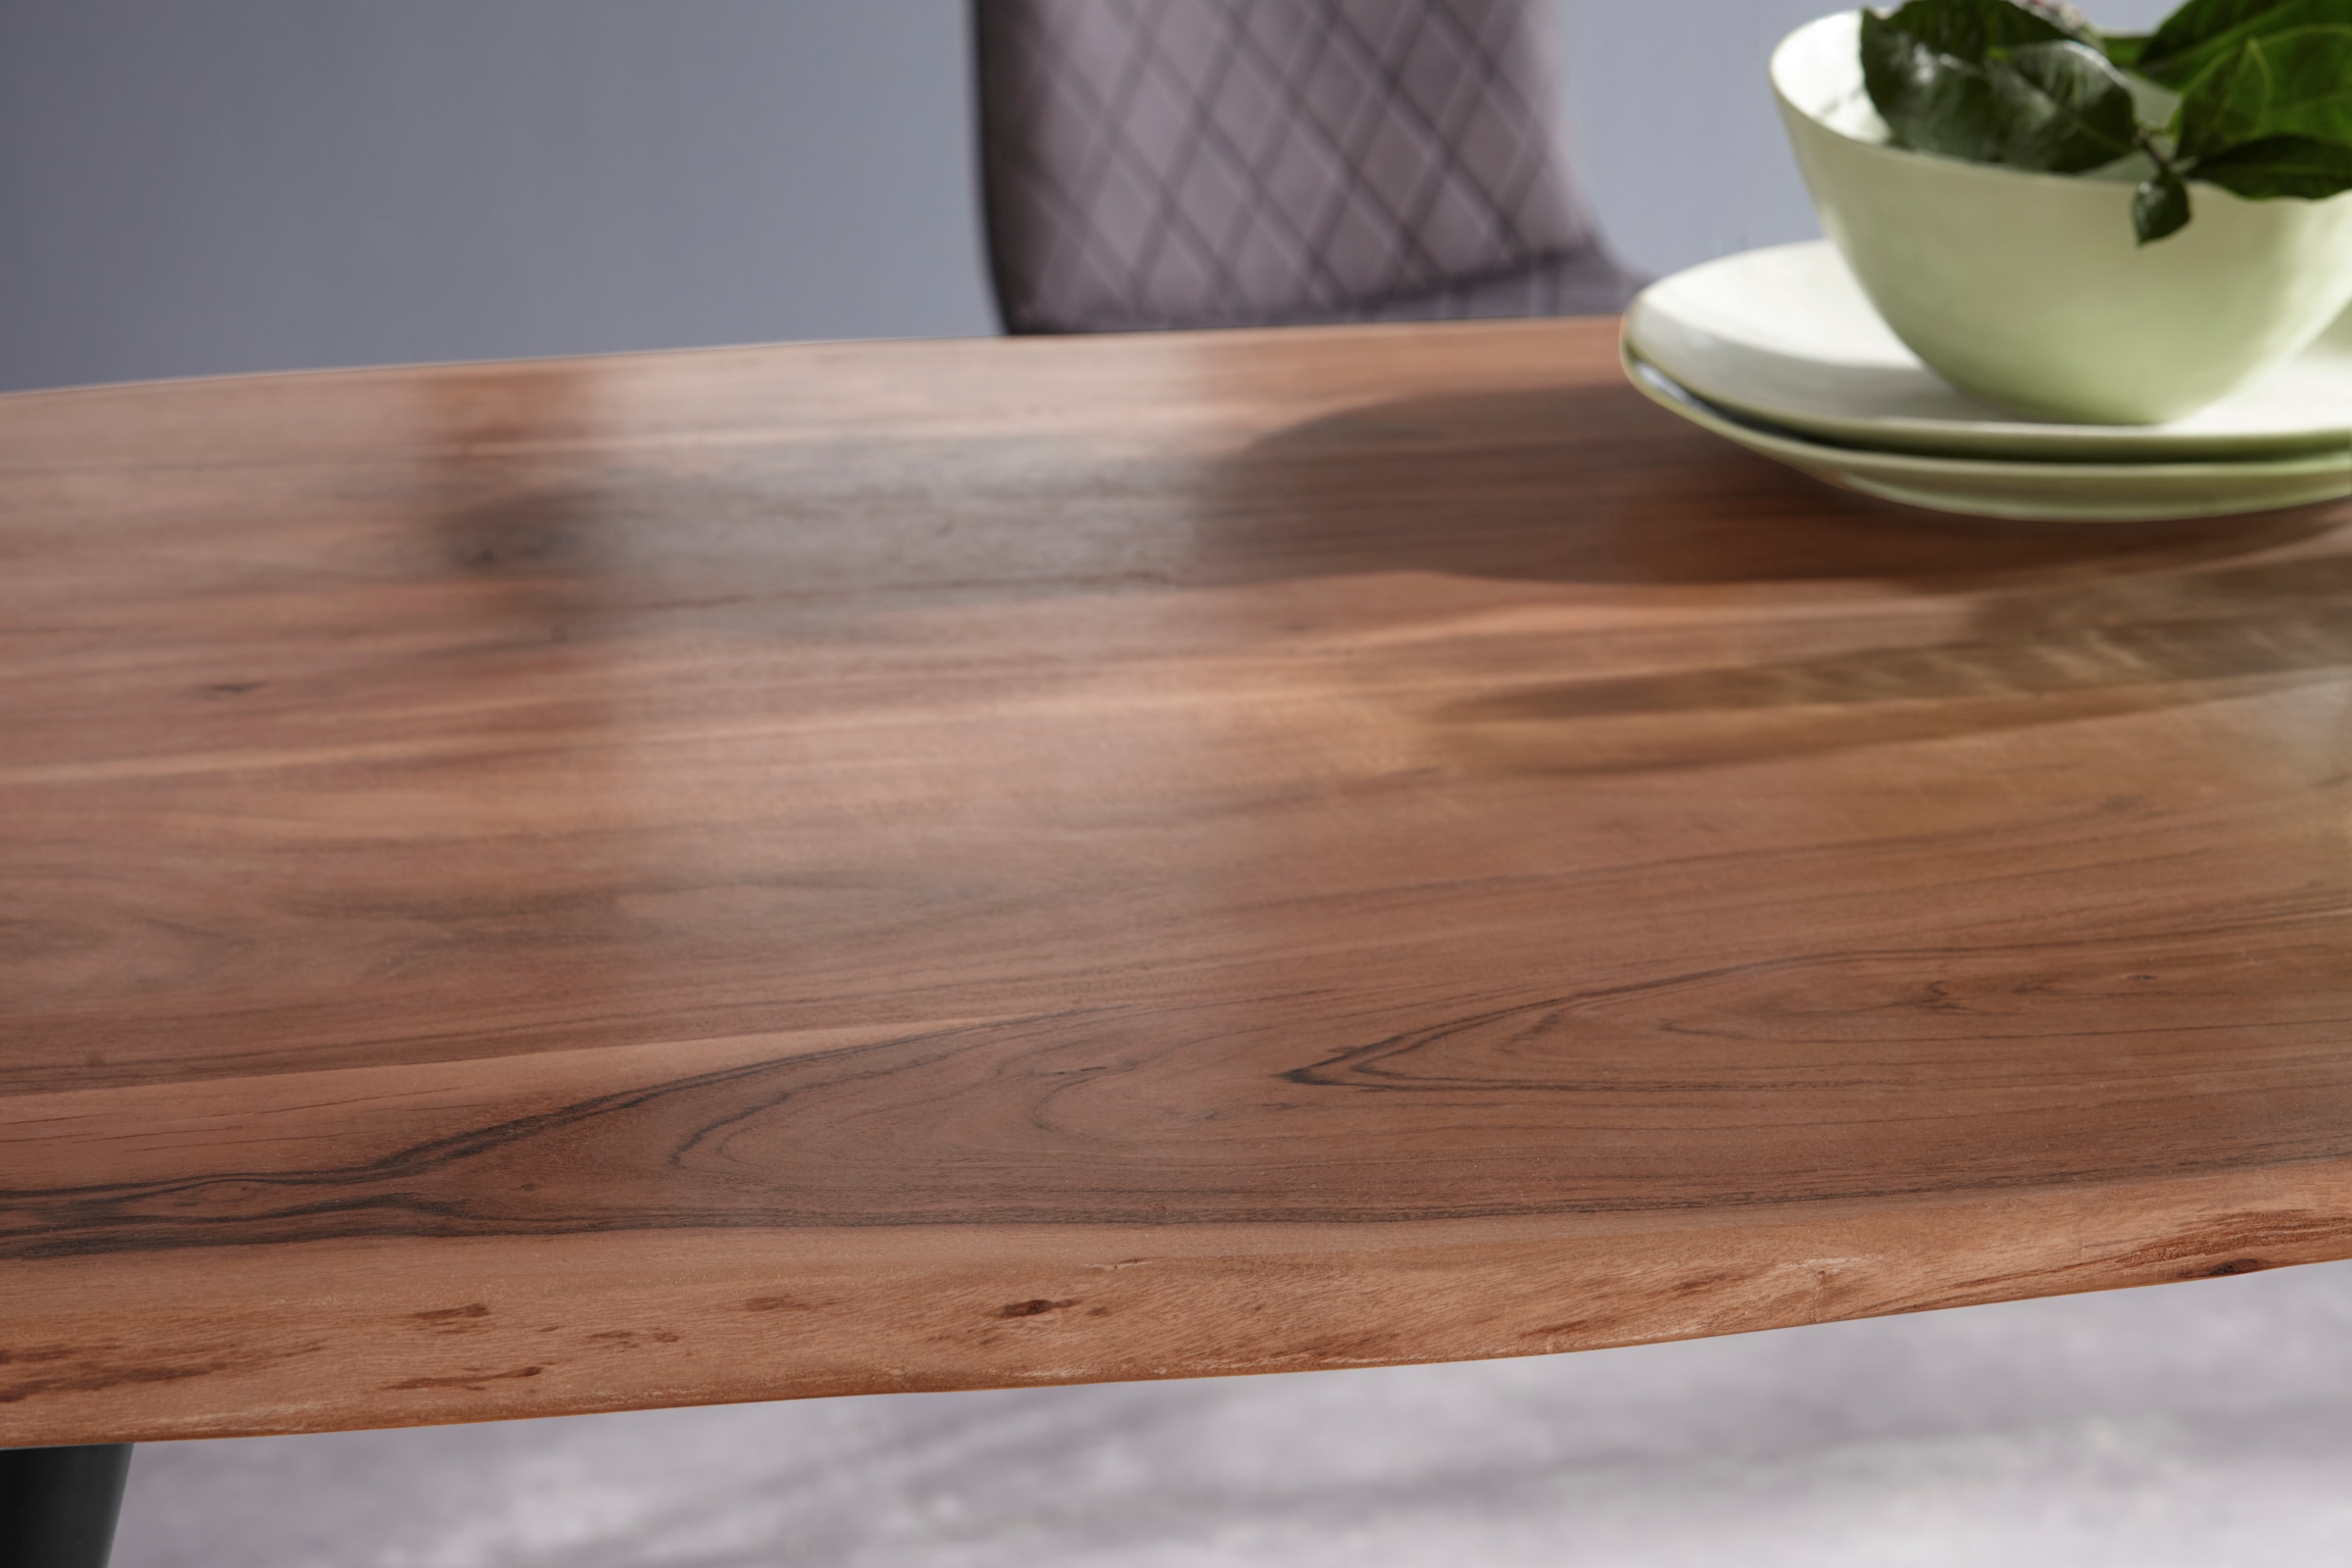 Home affaire Baumkantentisch, Massivholz, 26mm Tischplattenstärke, in verschiedenen Größen